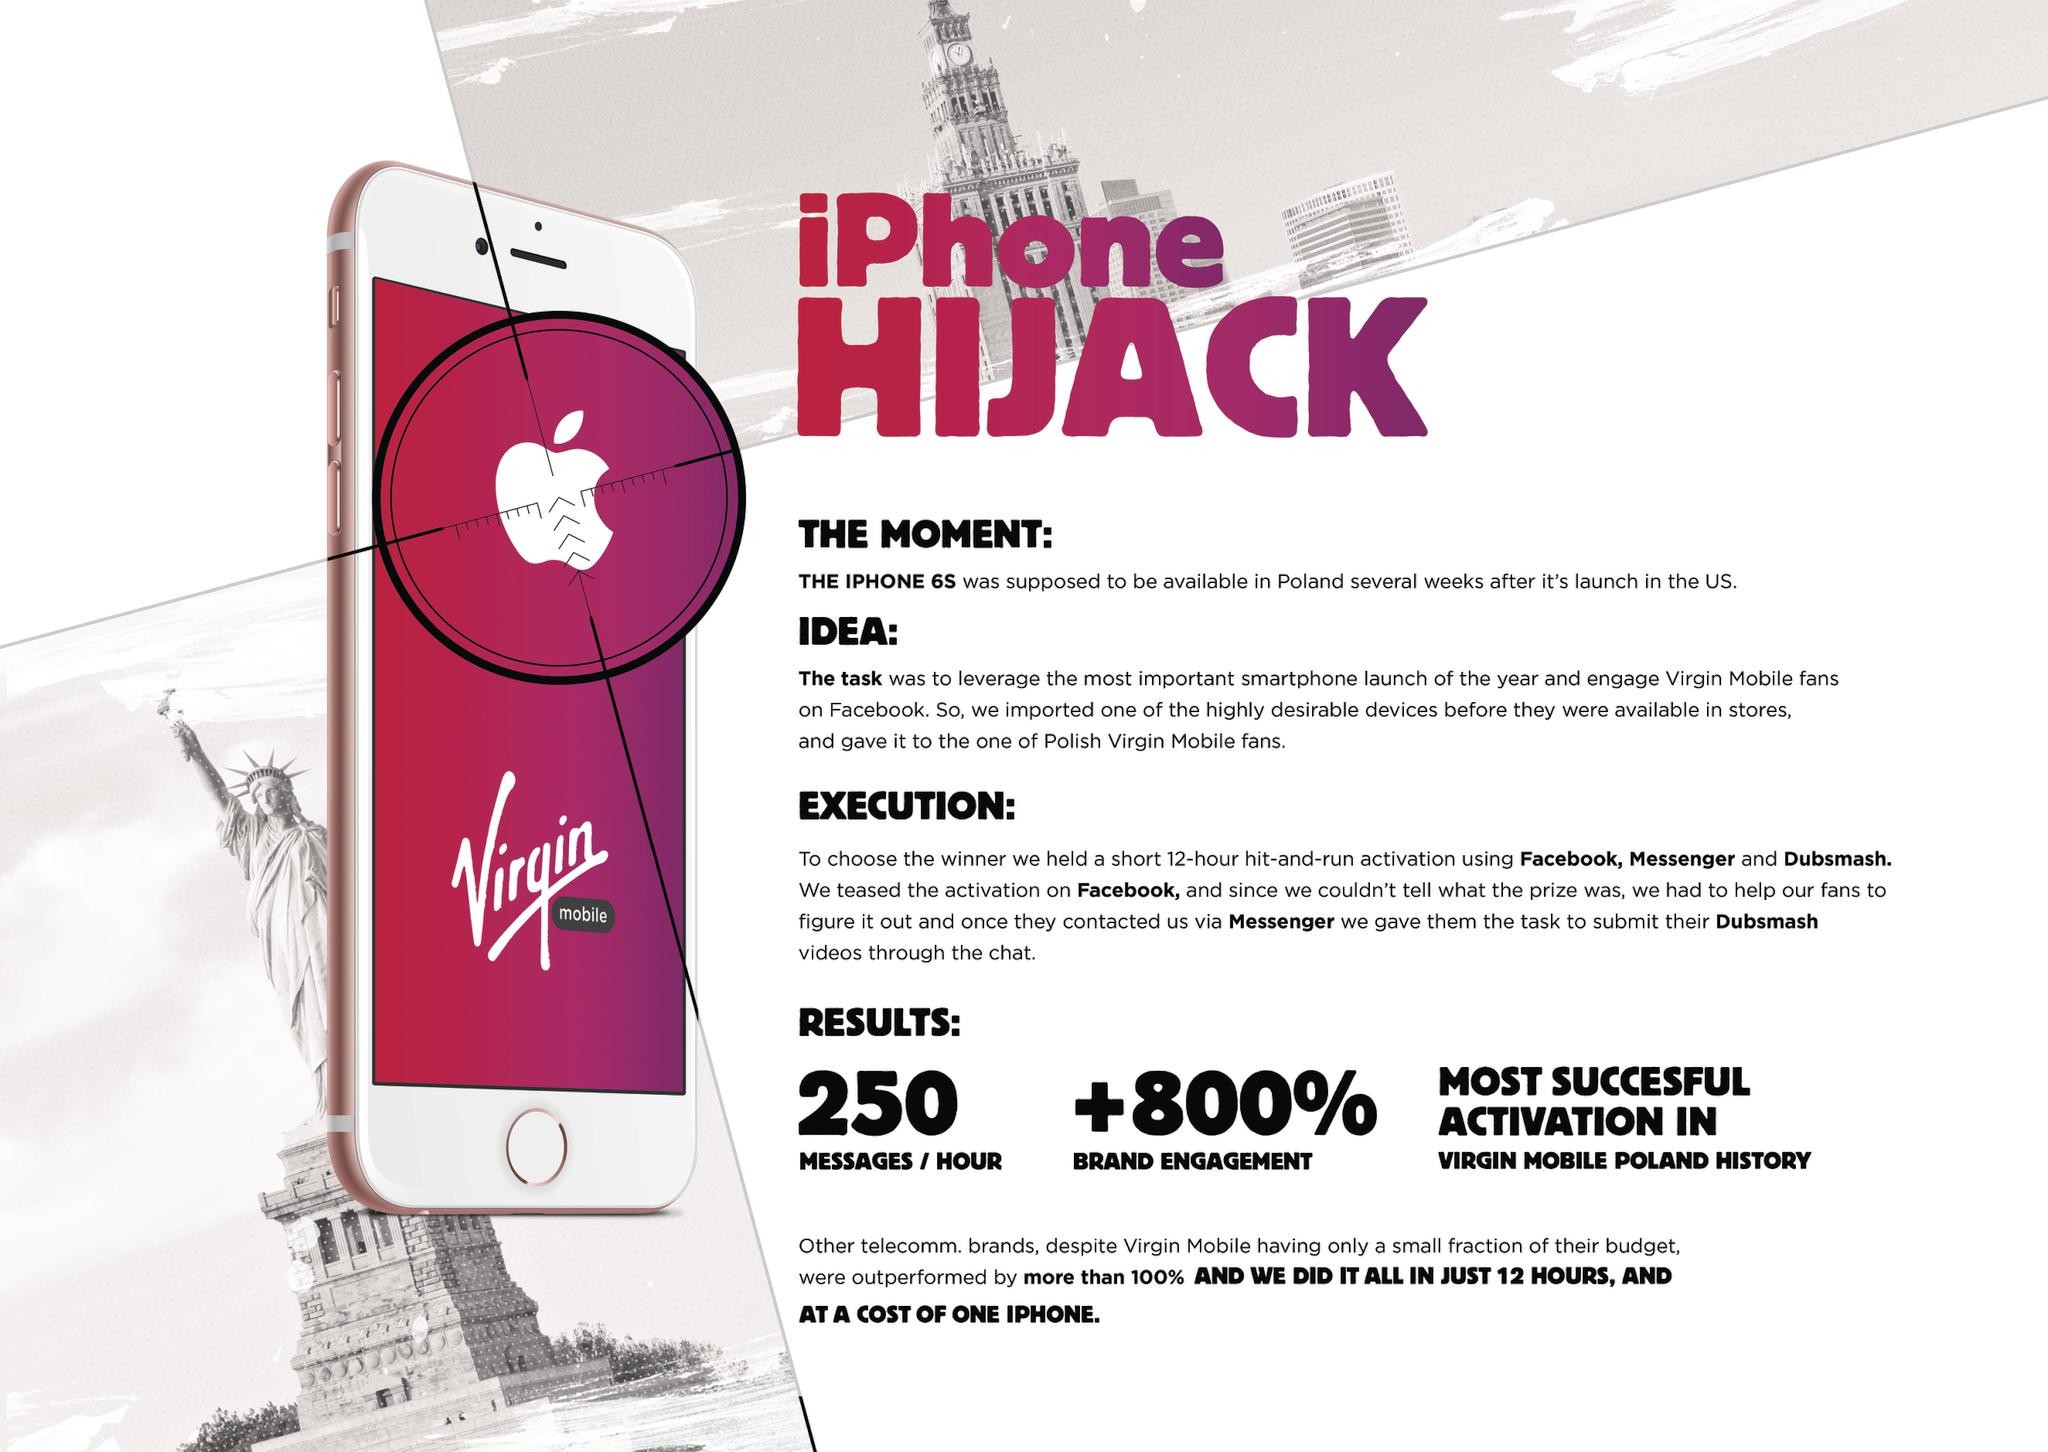 iPhone HiJack